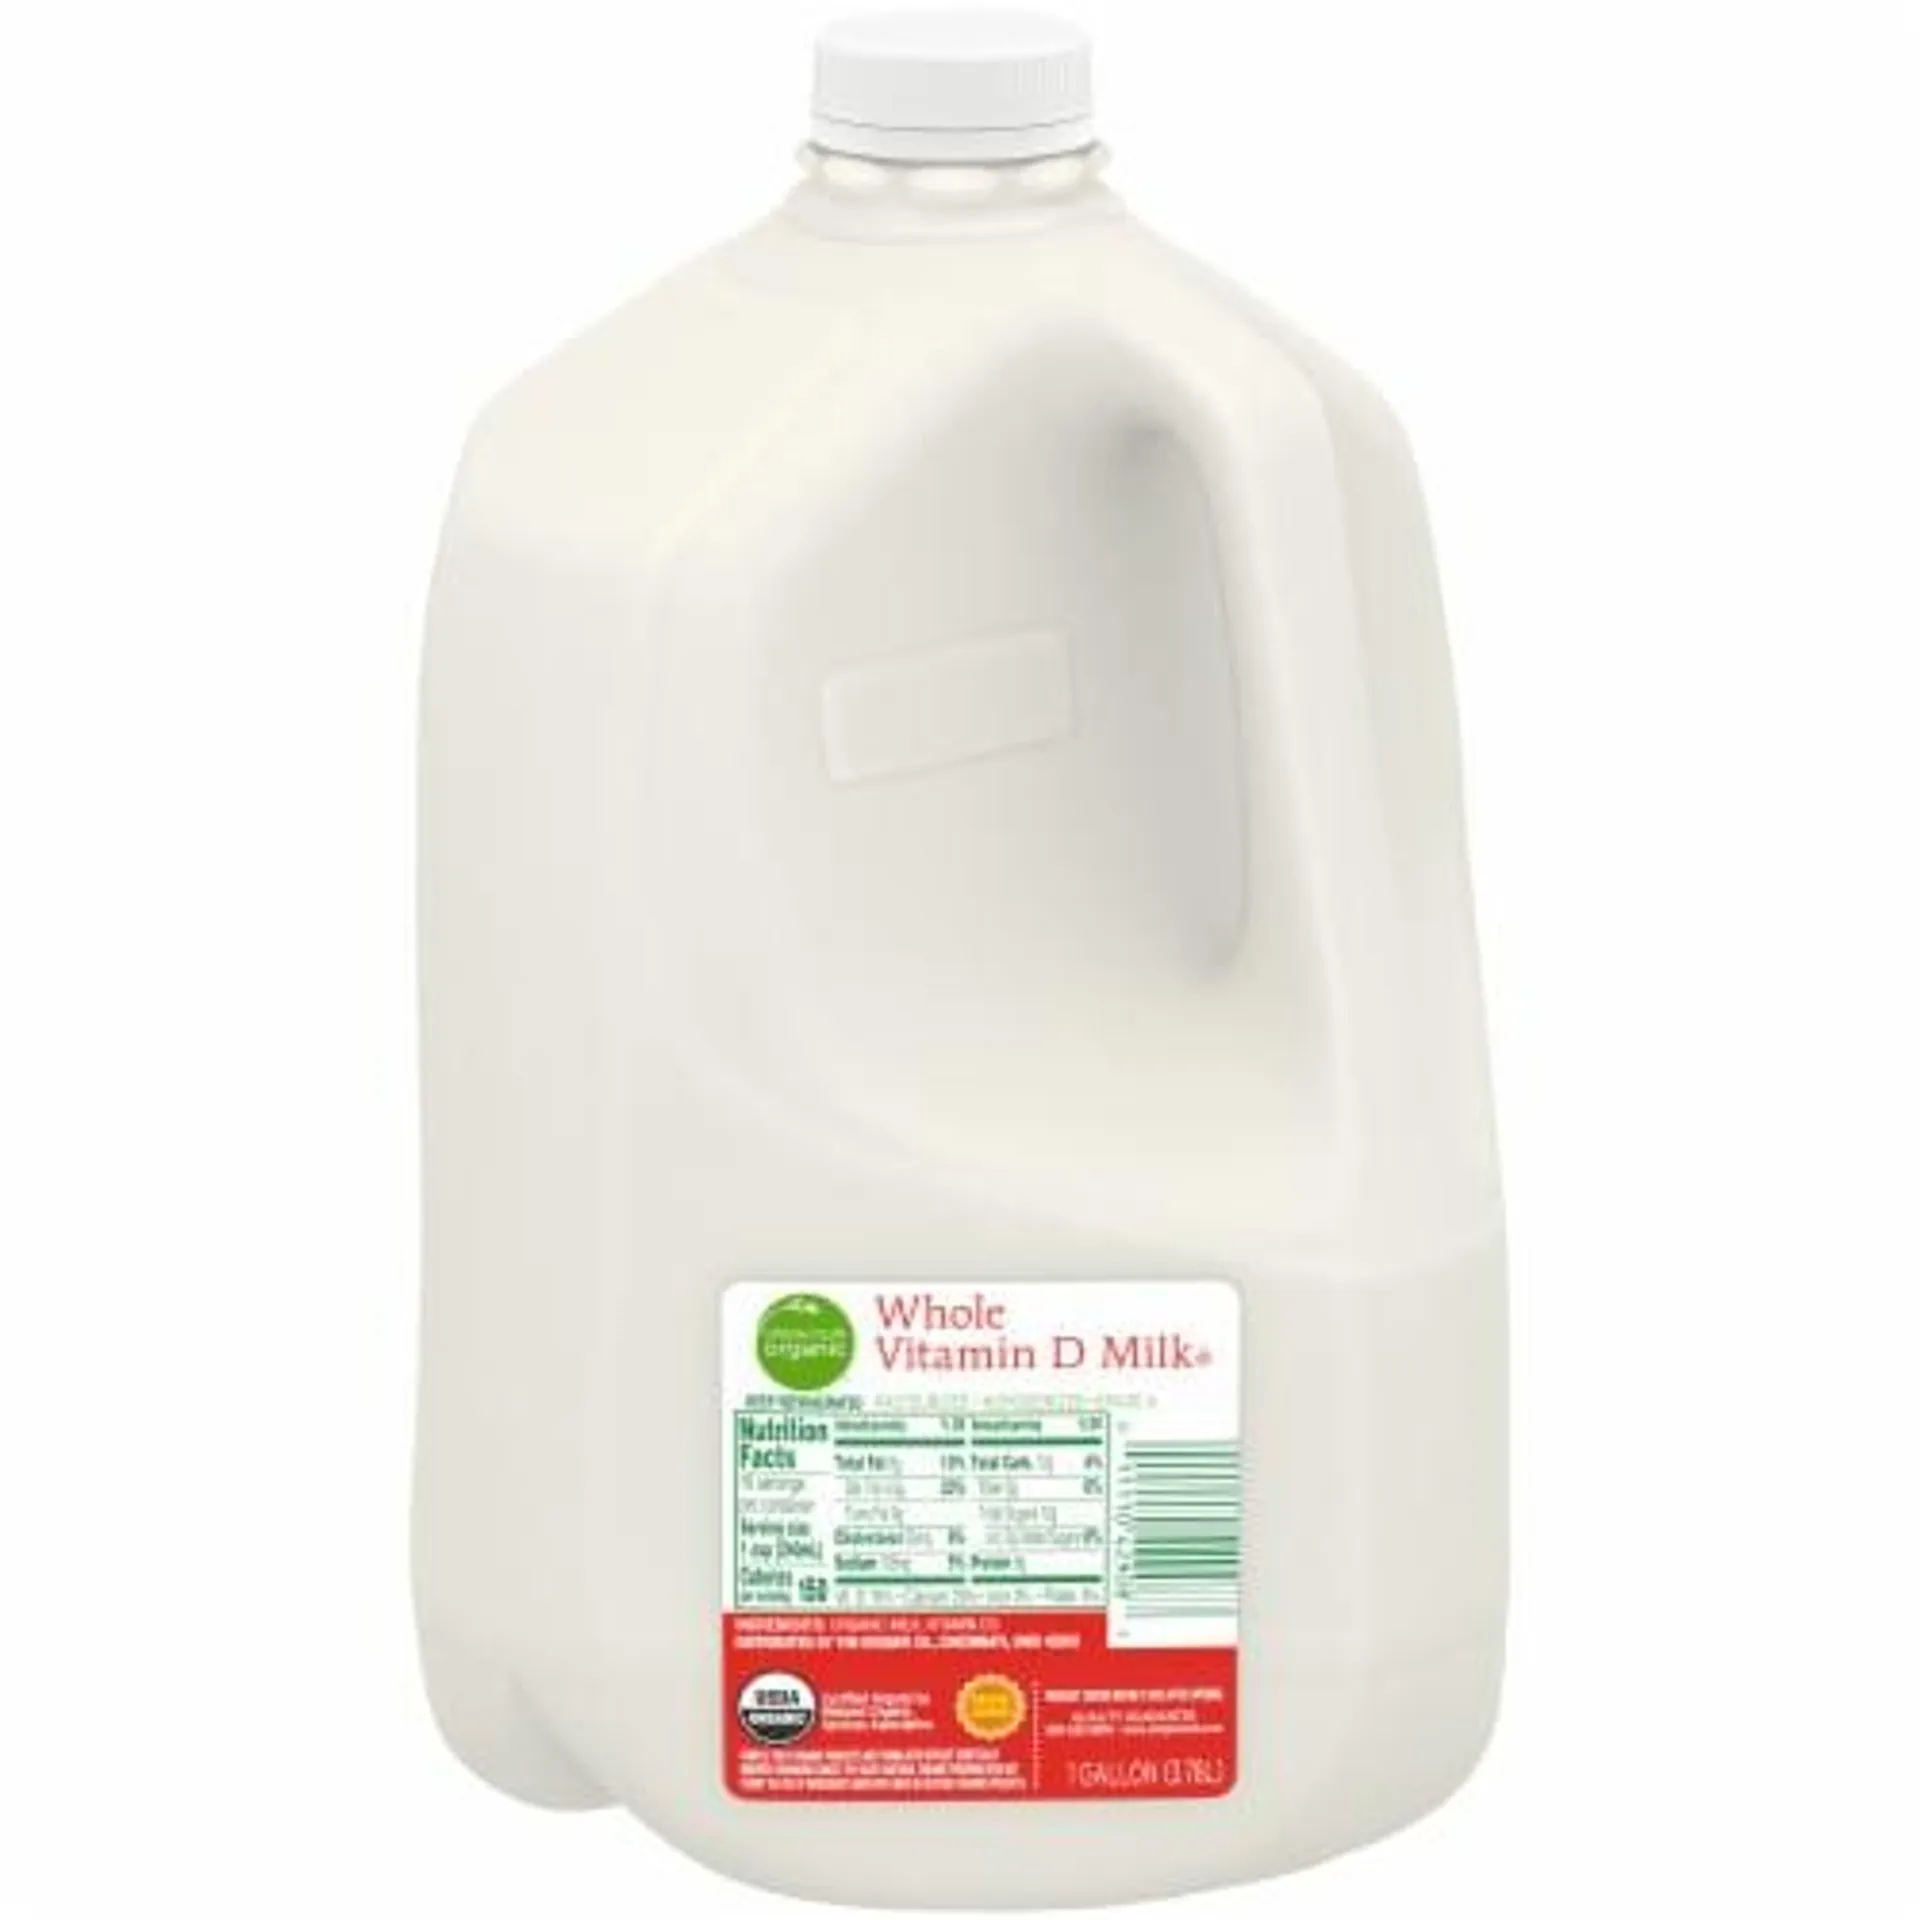 Simple Truth Organic® Whole Milk